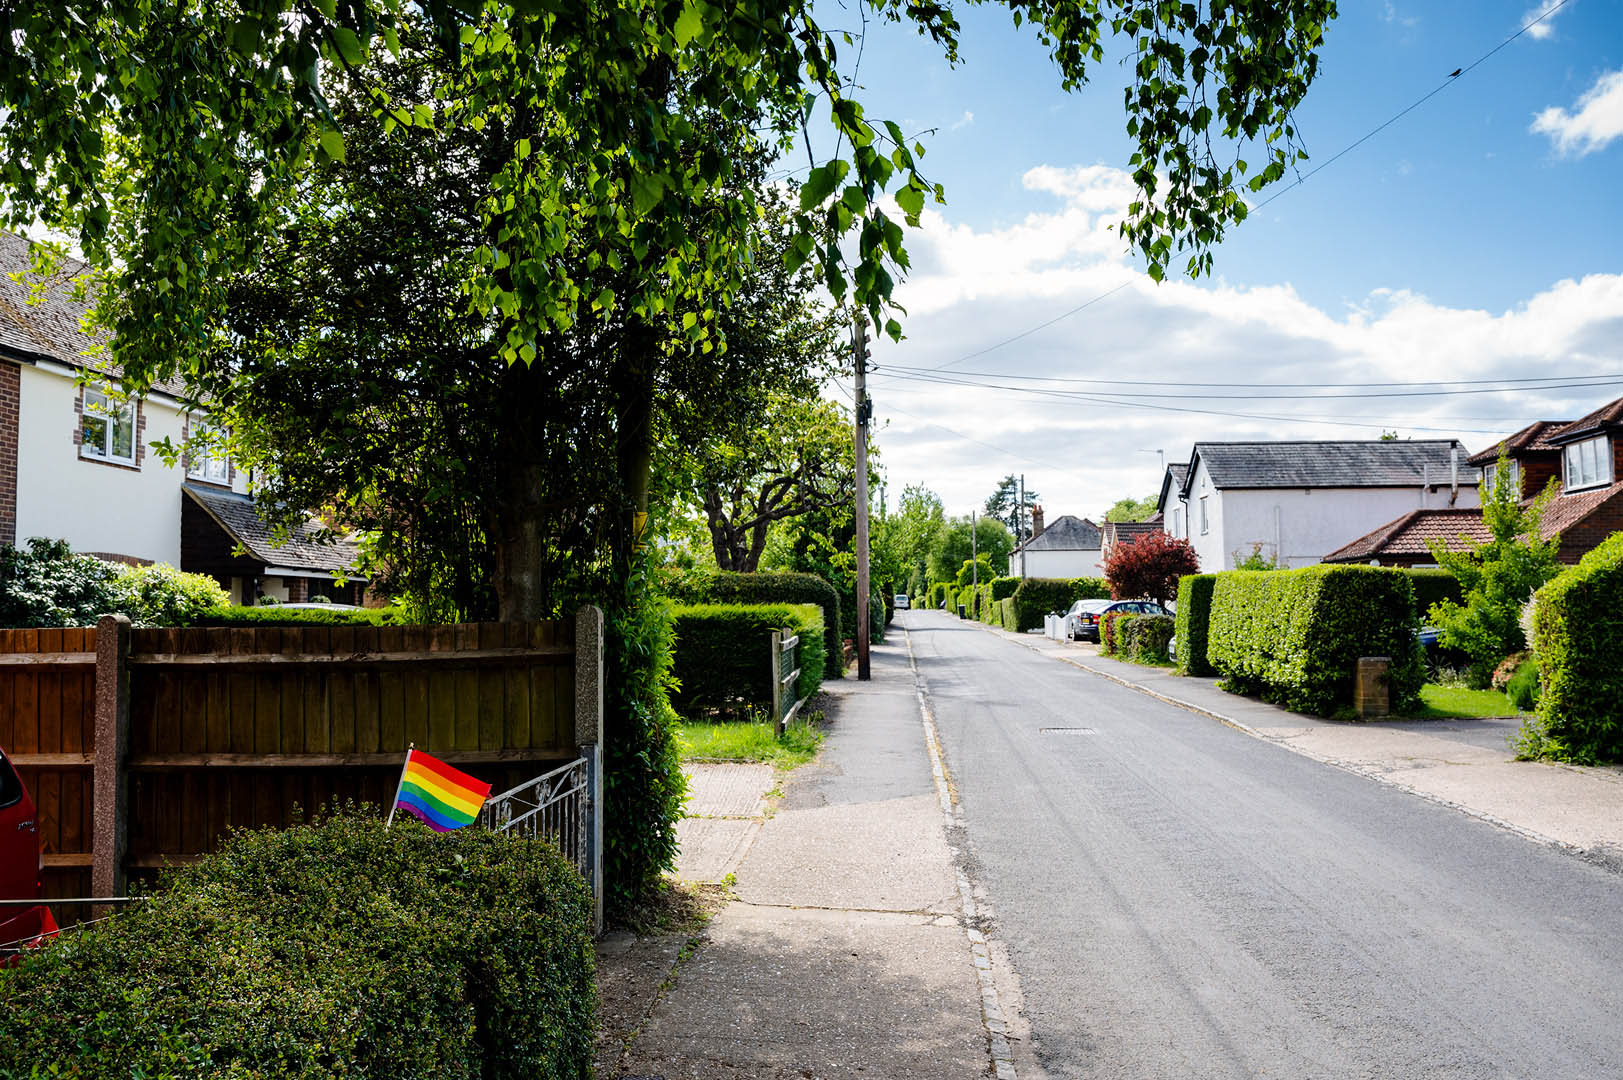 Rainbow flag in hedge on deserted street in Lockdown